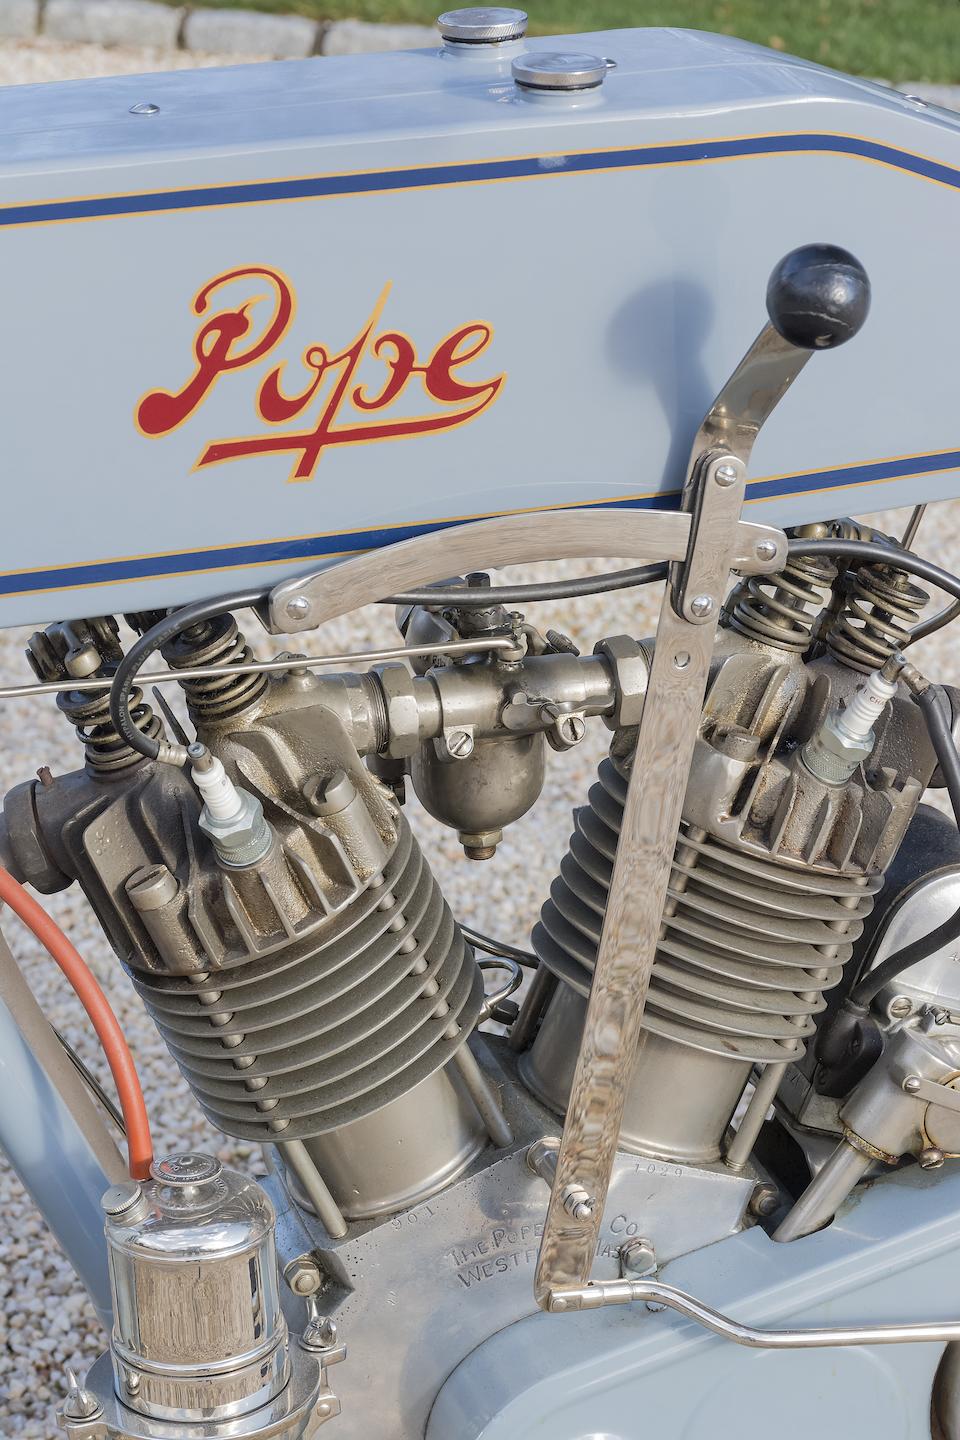 The Ex-Bud Ekins,1913 Pope 61ci Model L Twin Engine no. 9011029